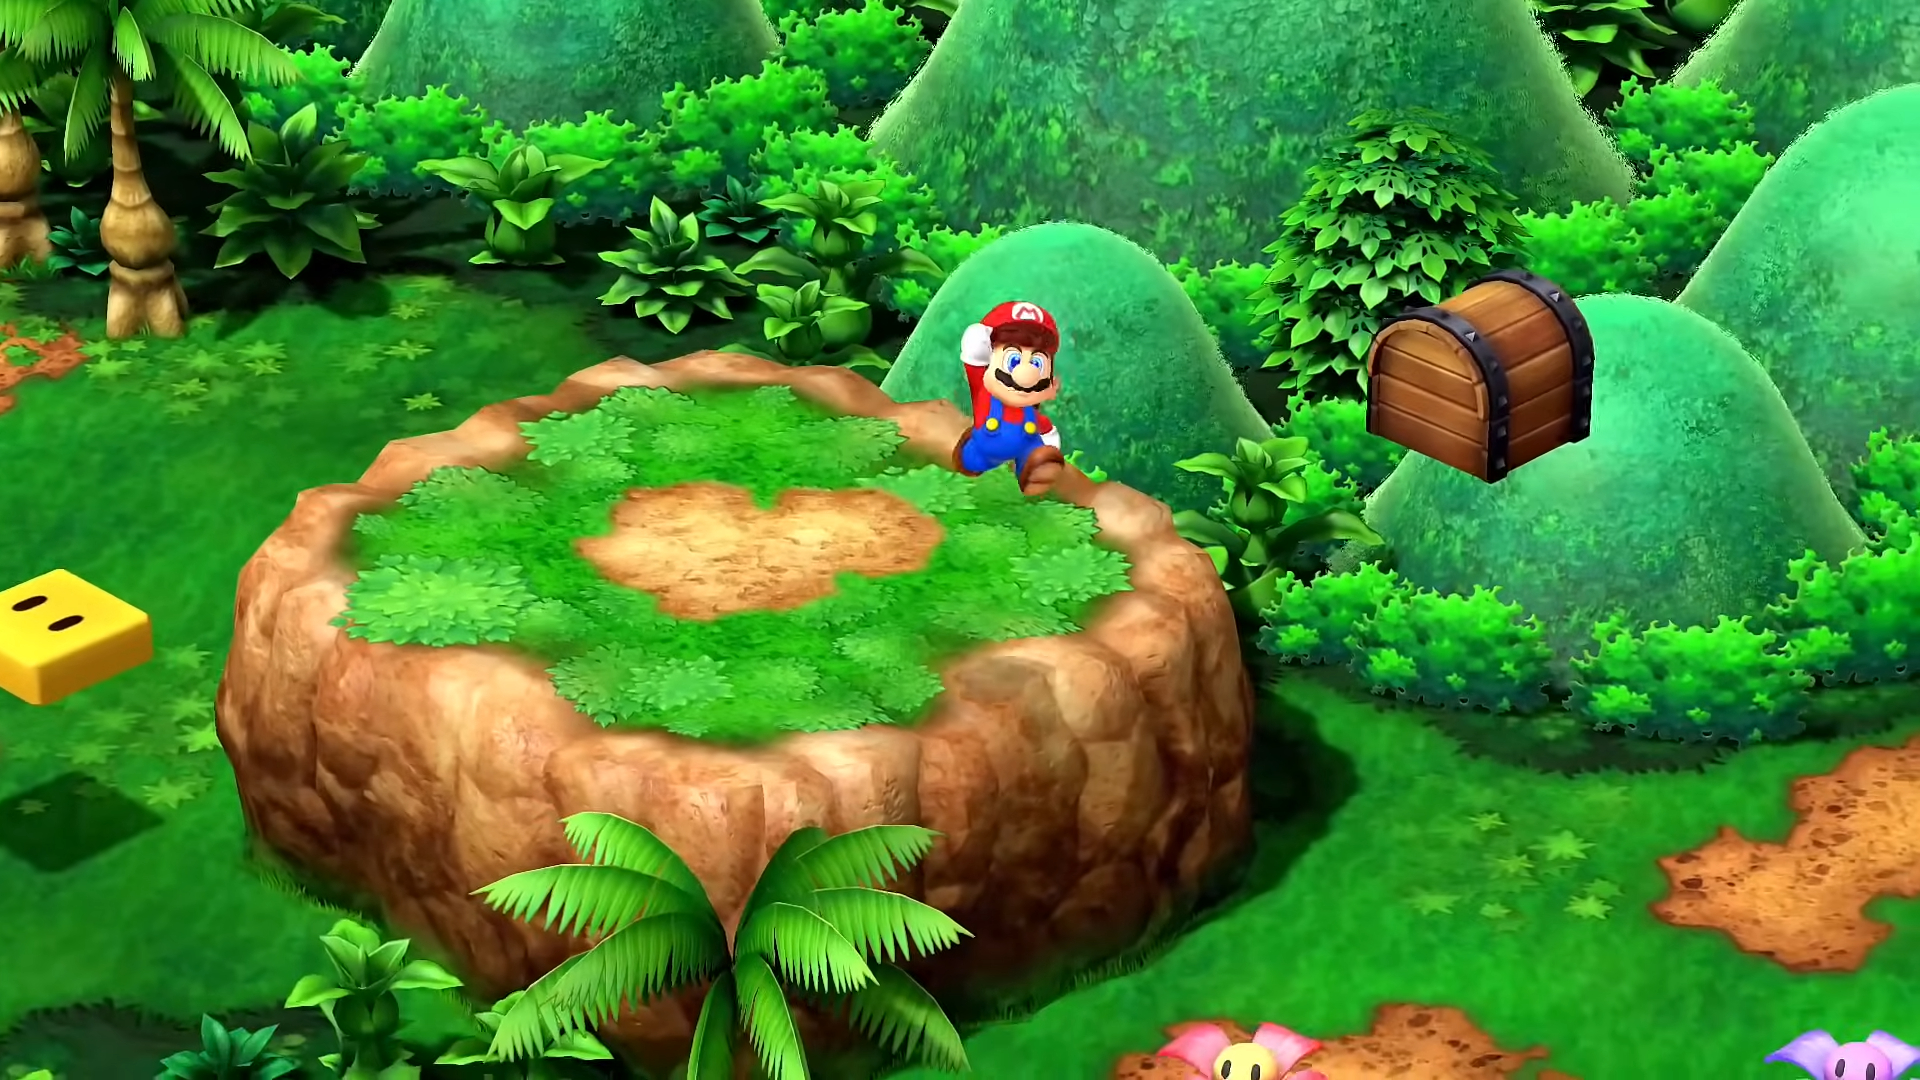 Mario jumping off a plateau.